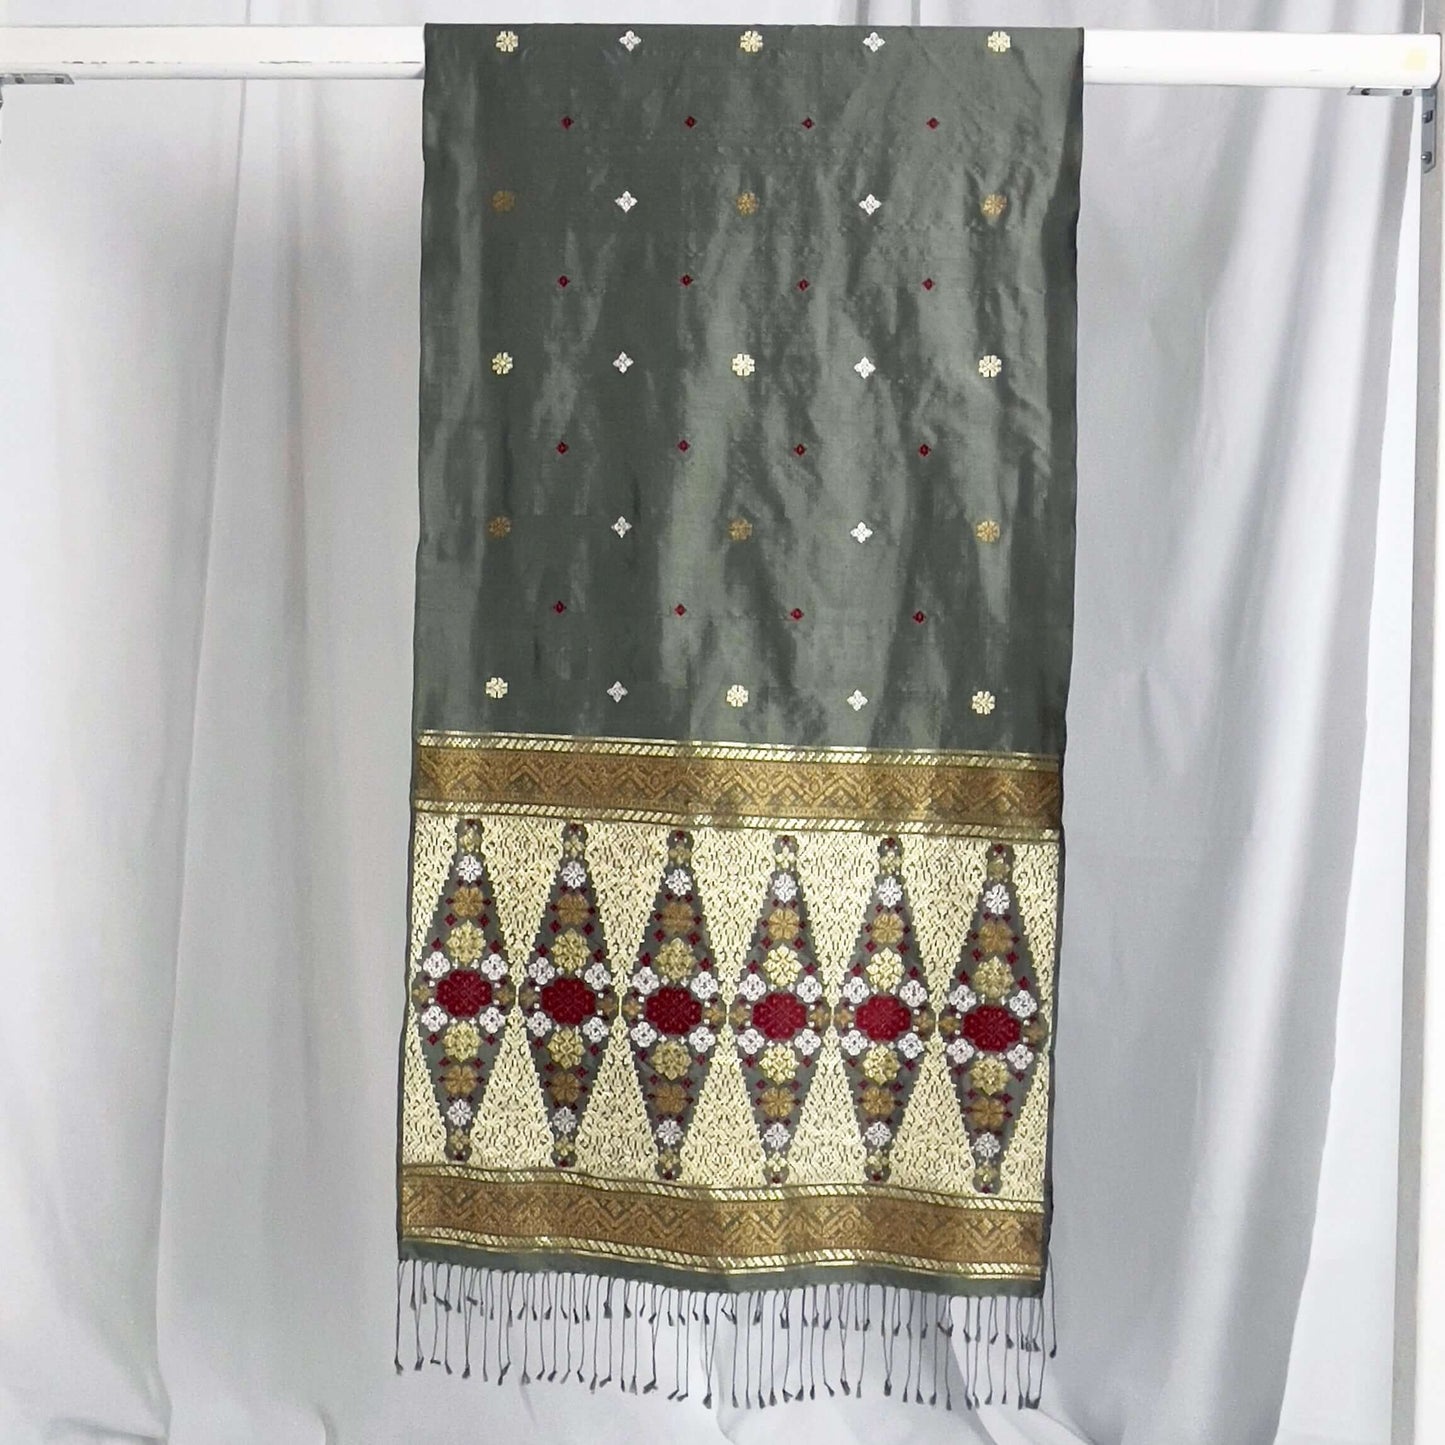 Gemilang Charcoal handwoven silk songket shawl textile